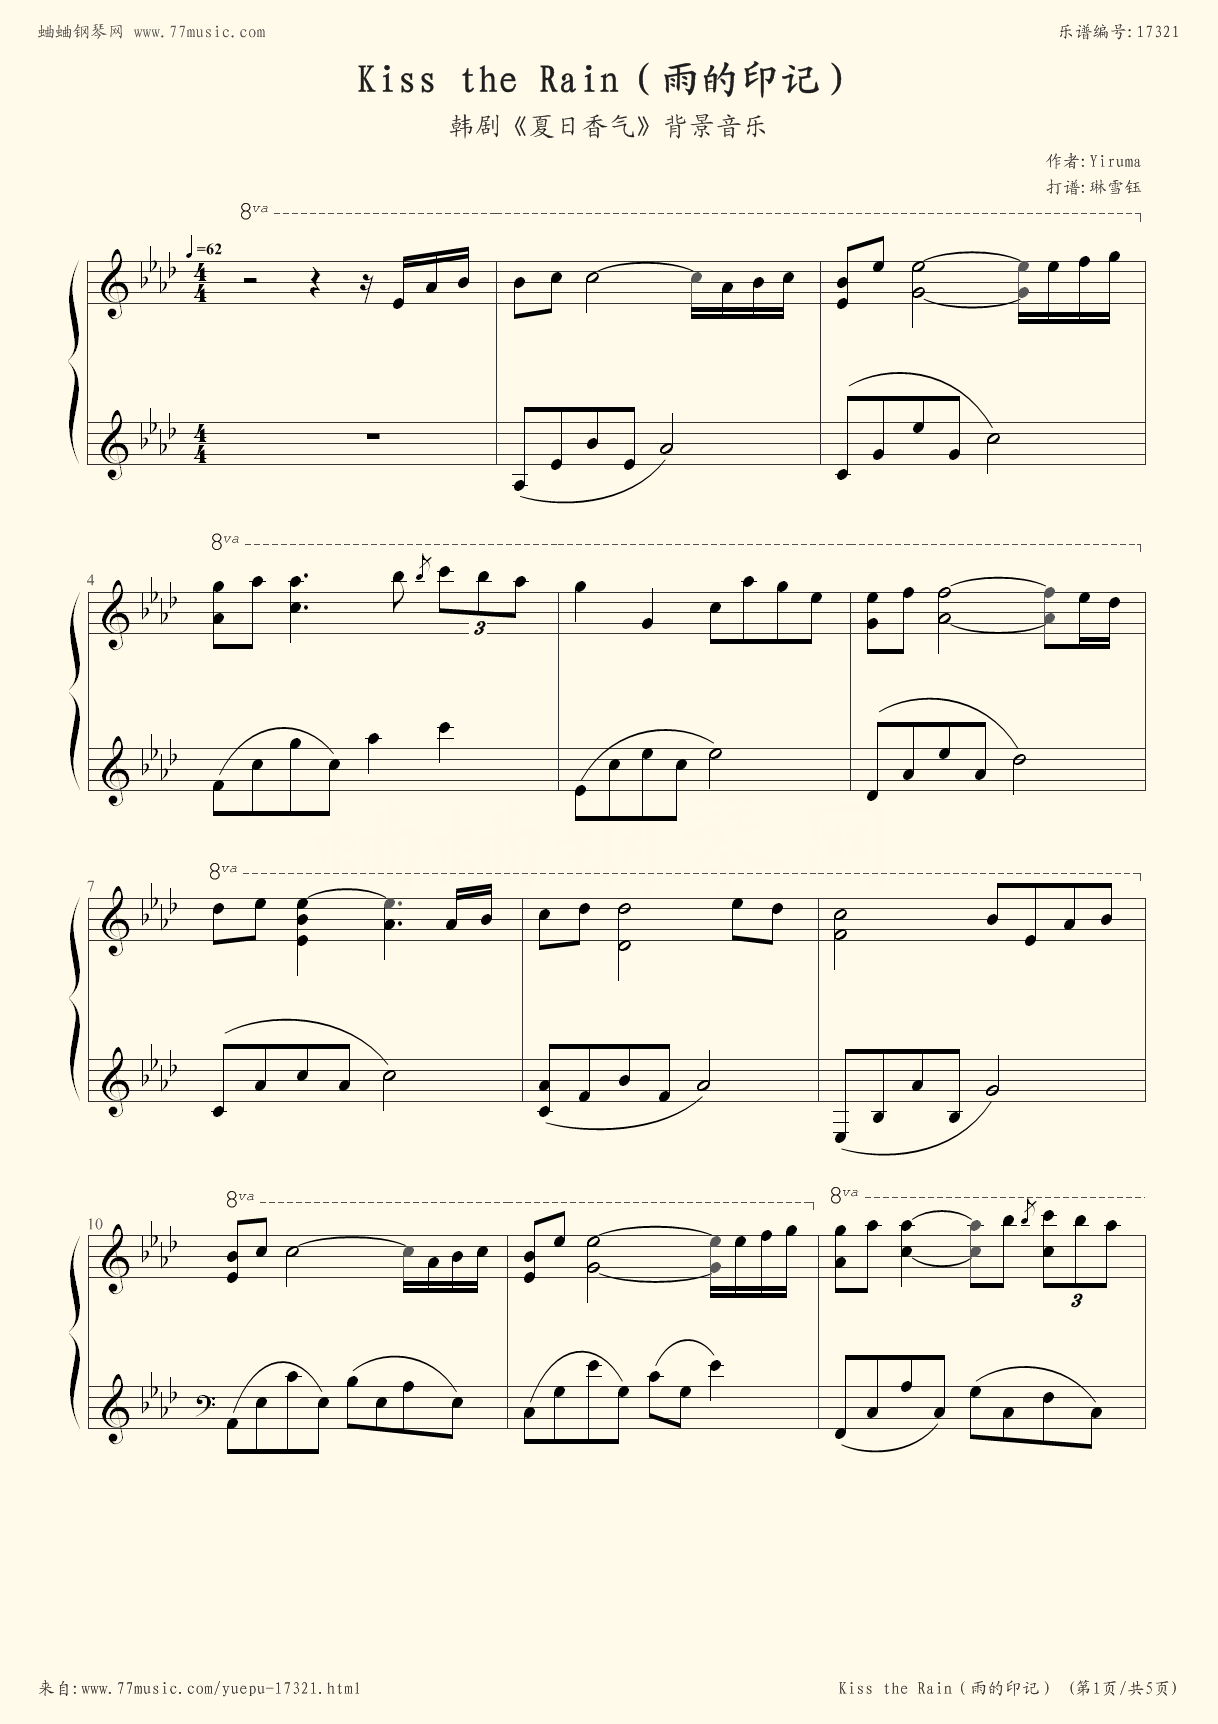 Kiss the Rain - Yiruma - Flash Version2 Piano Sheet Music Free